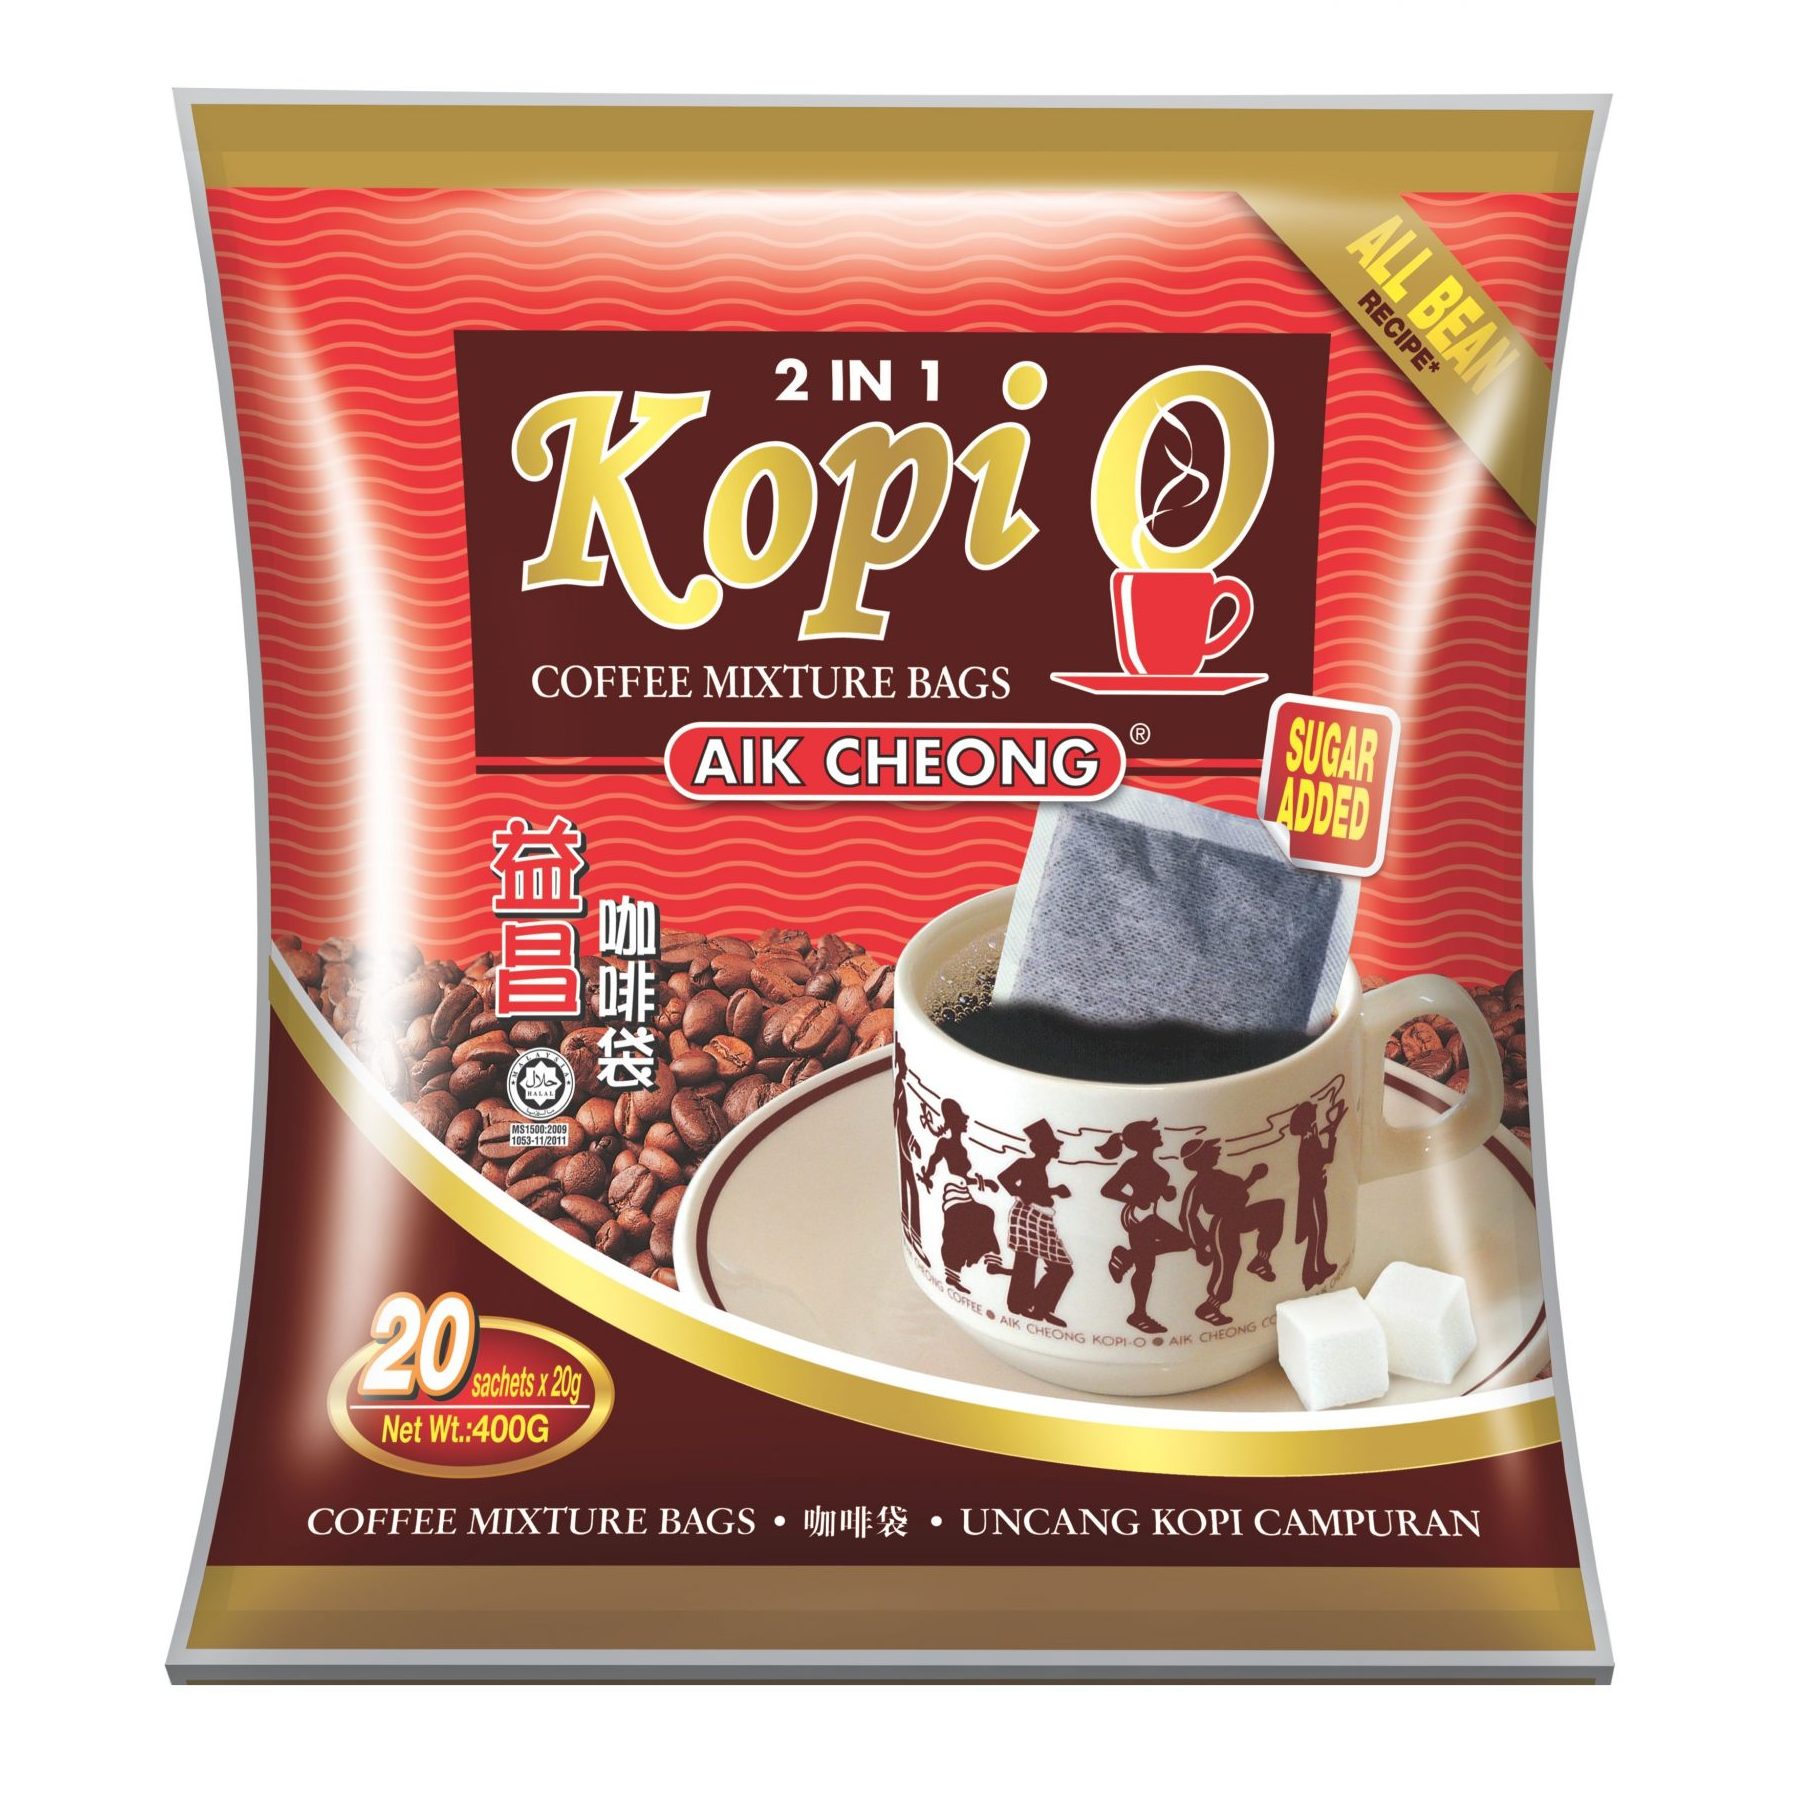 Aik Cheong 2in1 Kopi O sugar added 20s x 20g – Bundle of 6